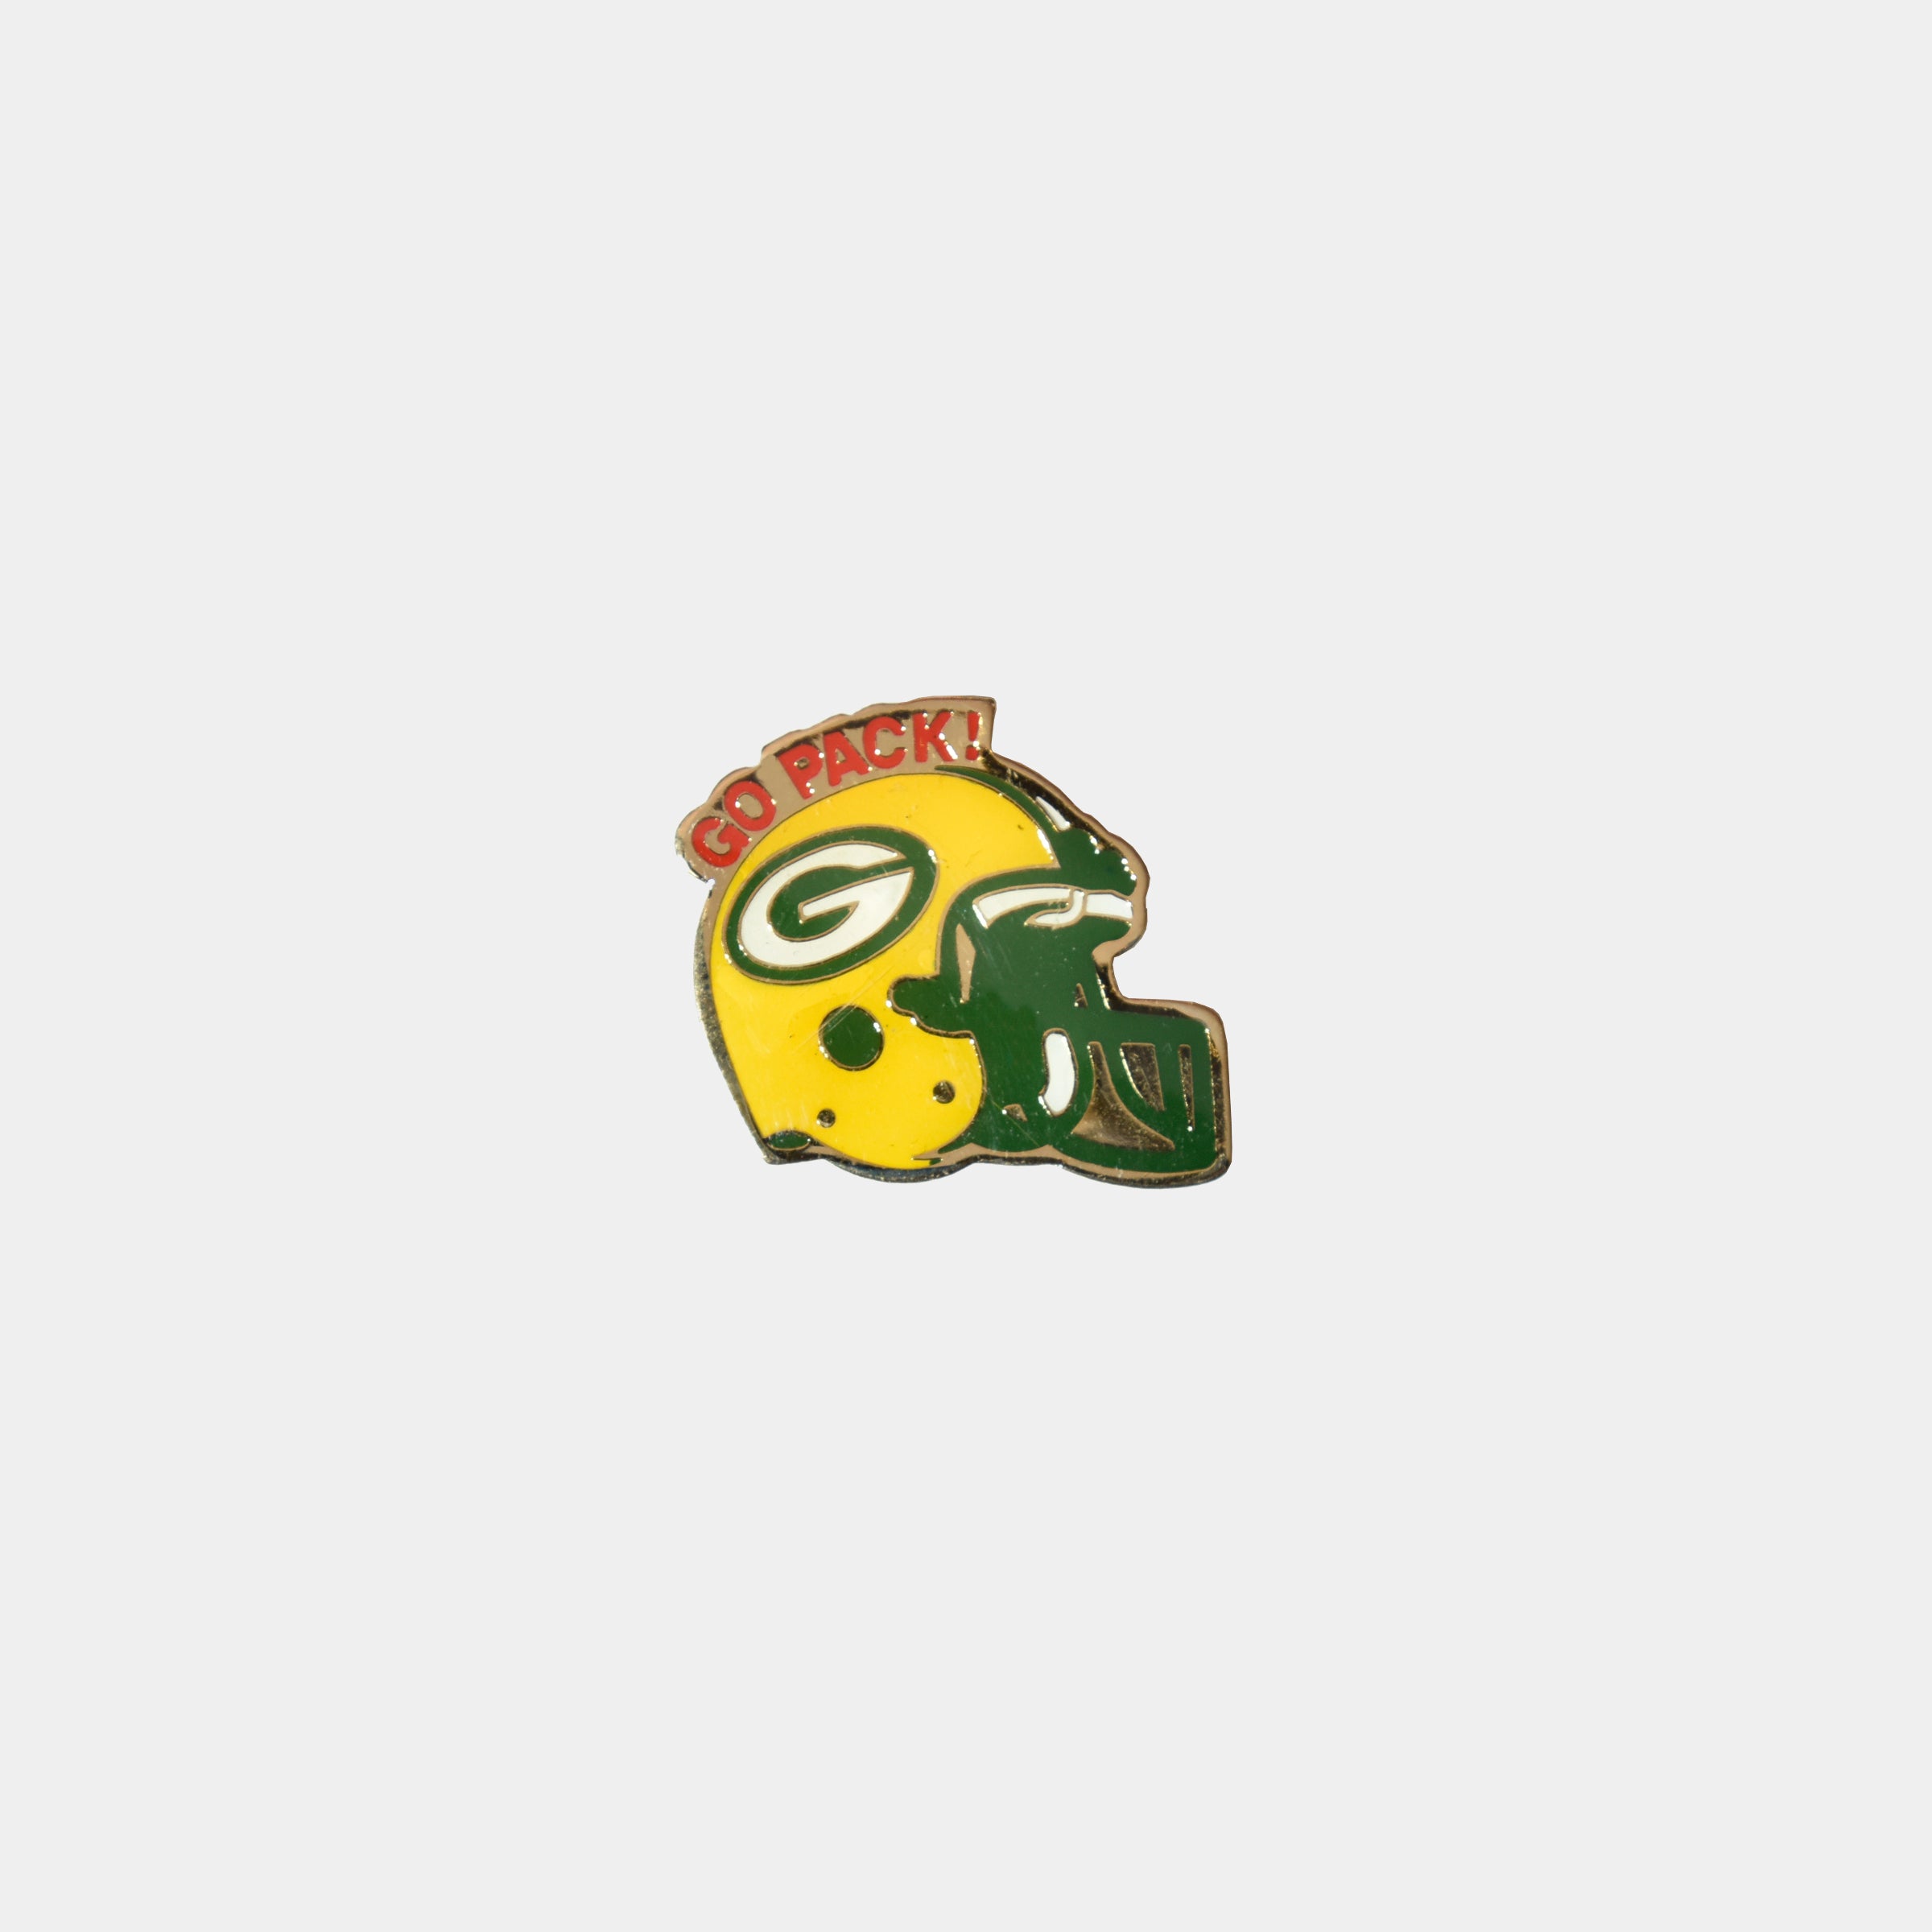 Green Bay Packers "Go Pack" Vintage Enamel Pin